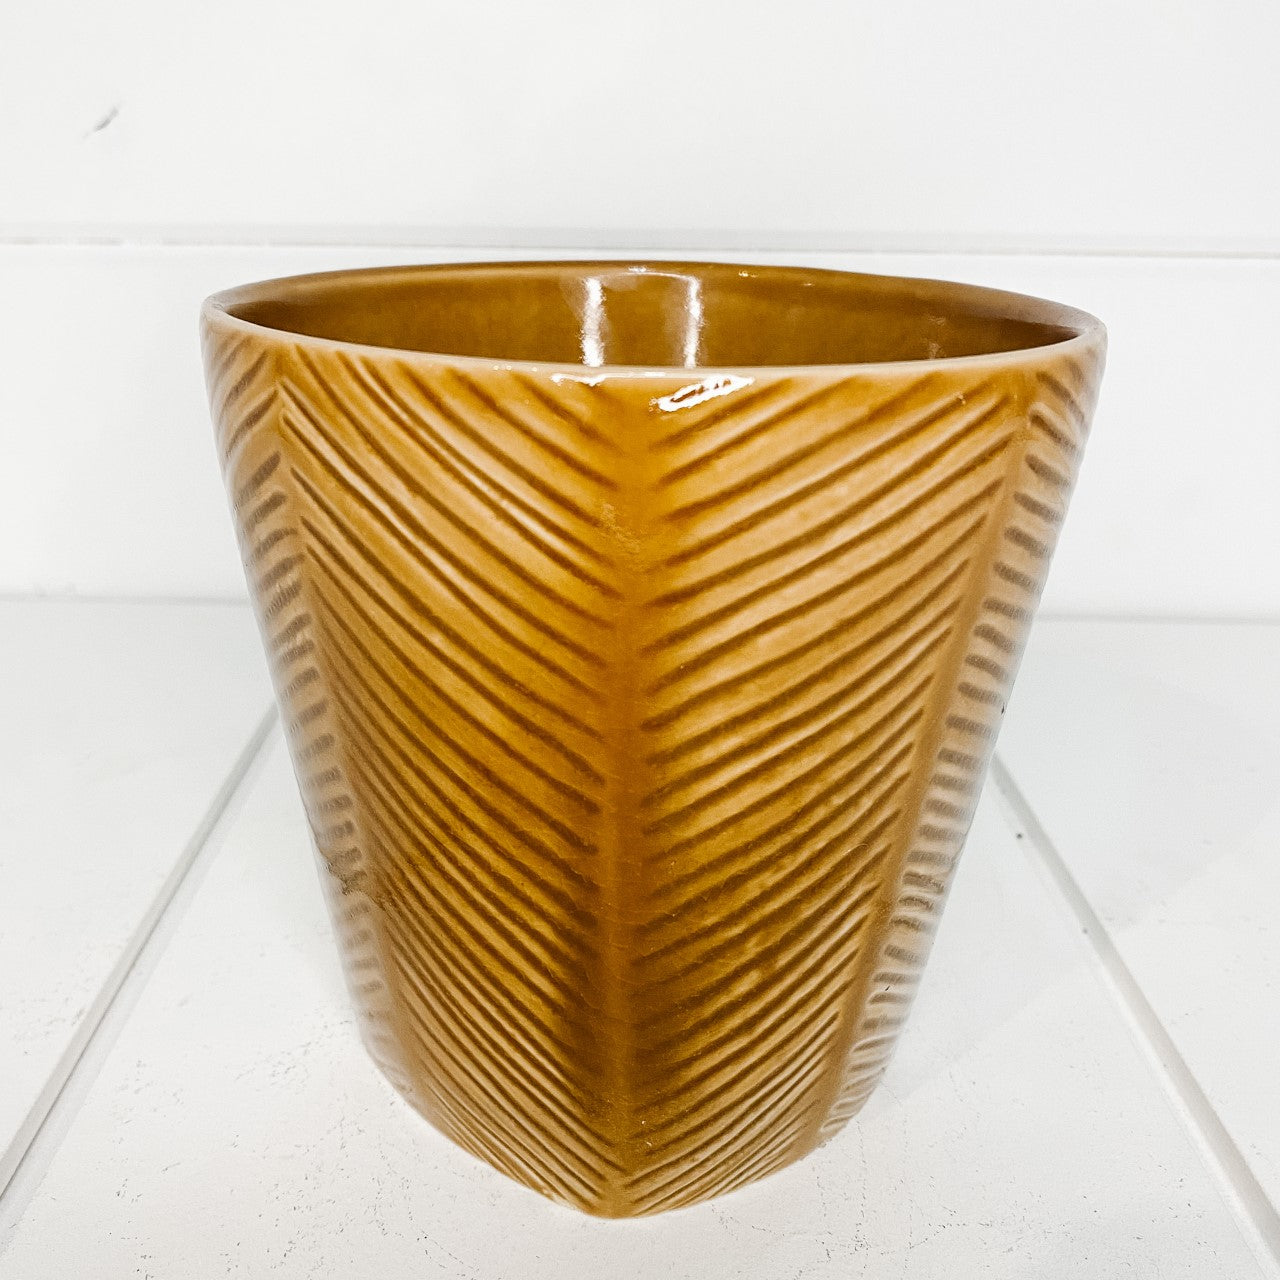 Glazed ceramic plant pot